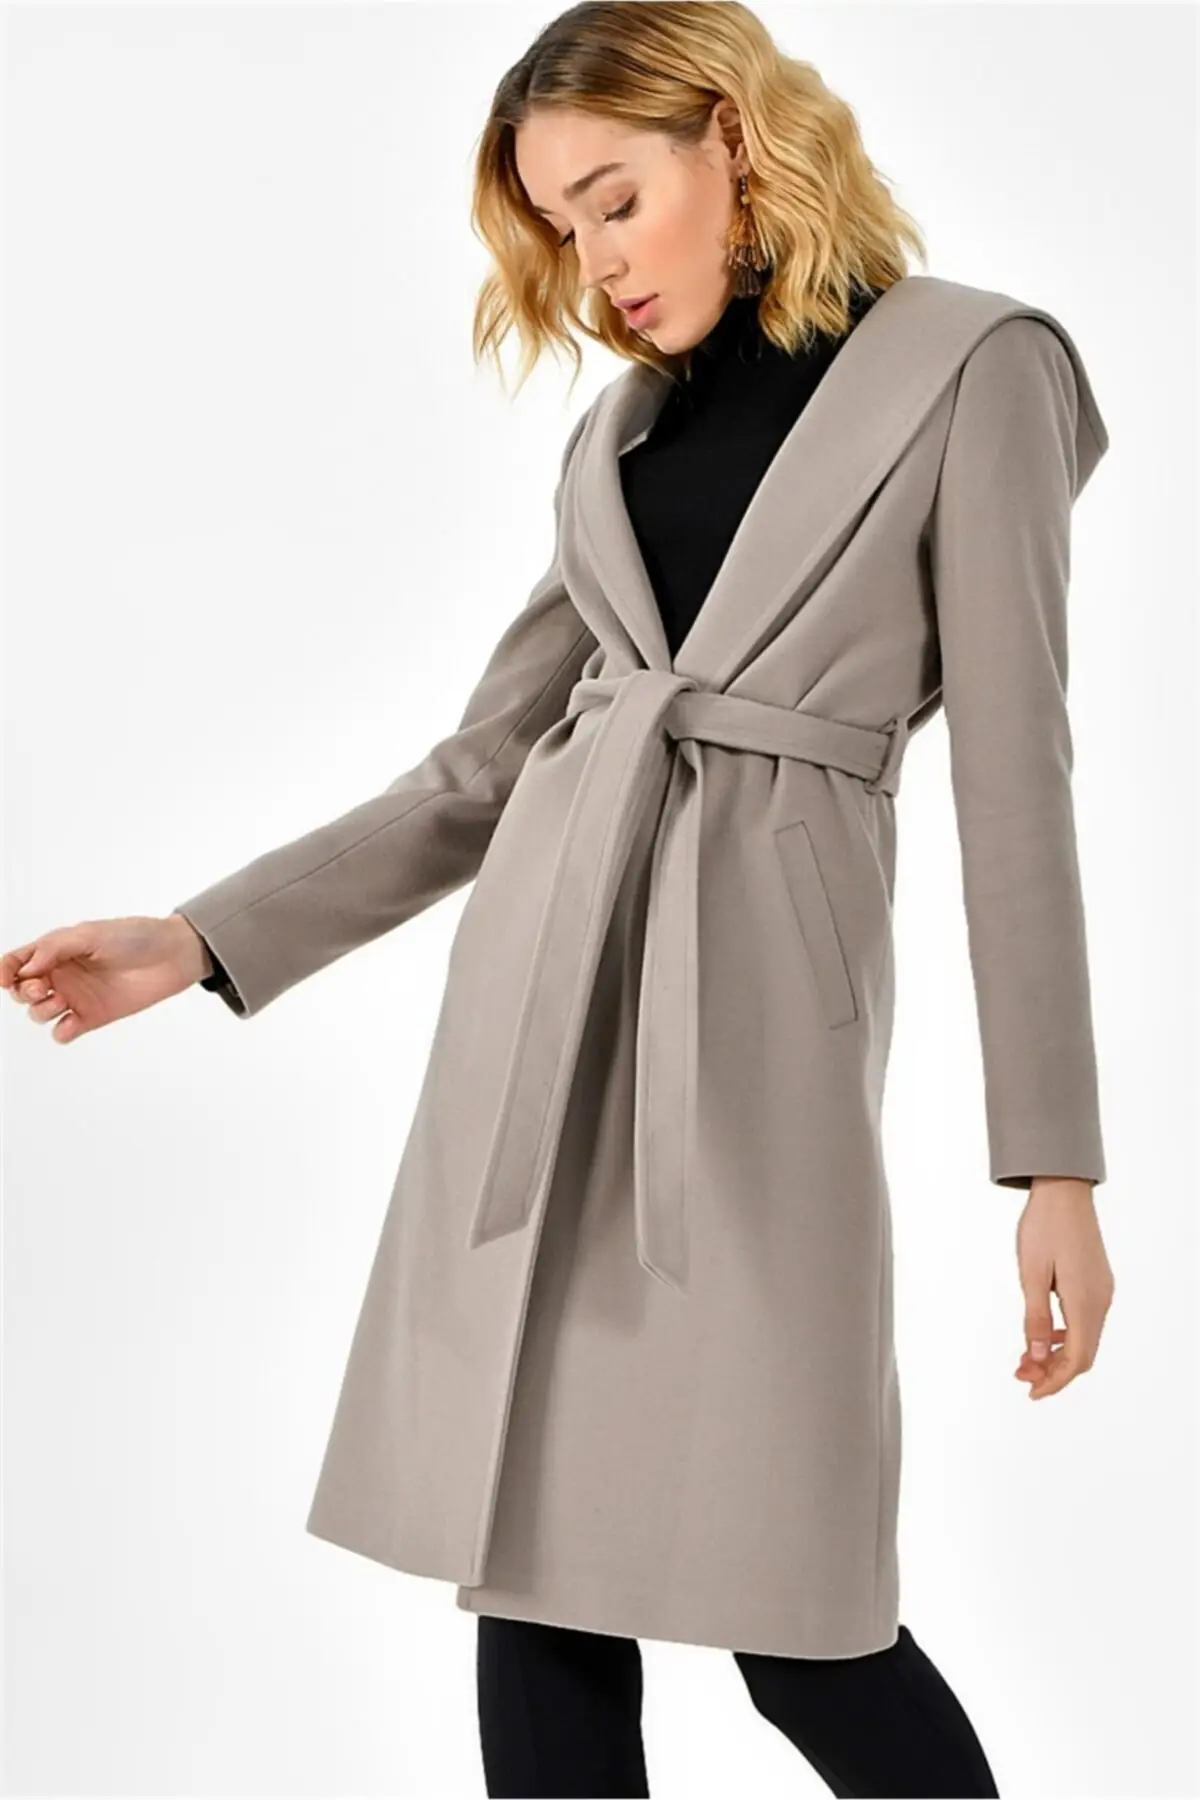 Women's Coats Beige Long Belt Pocket Hooded Thick Stylish Elegant Useful 2021 Winter Autumn Fashion Outerwear Coats